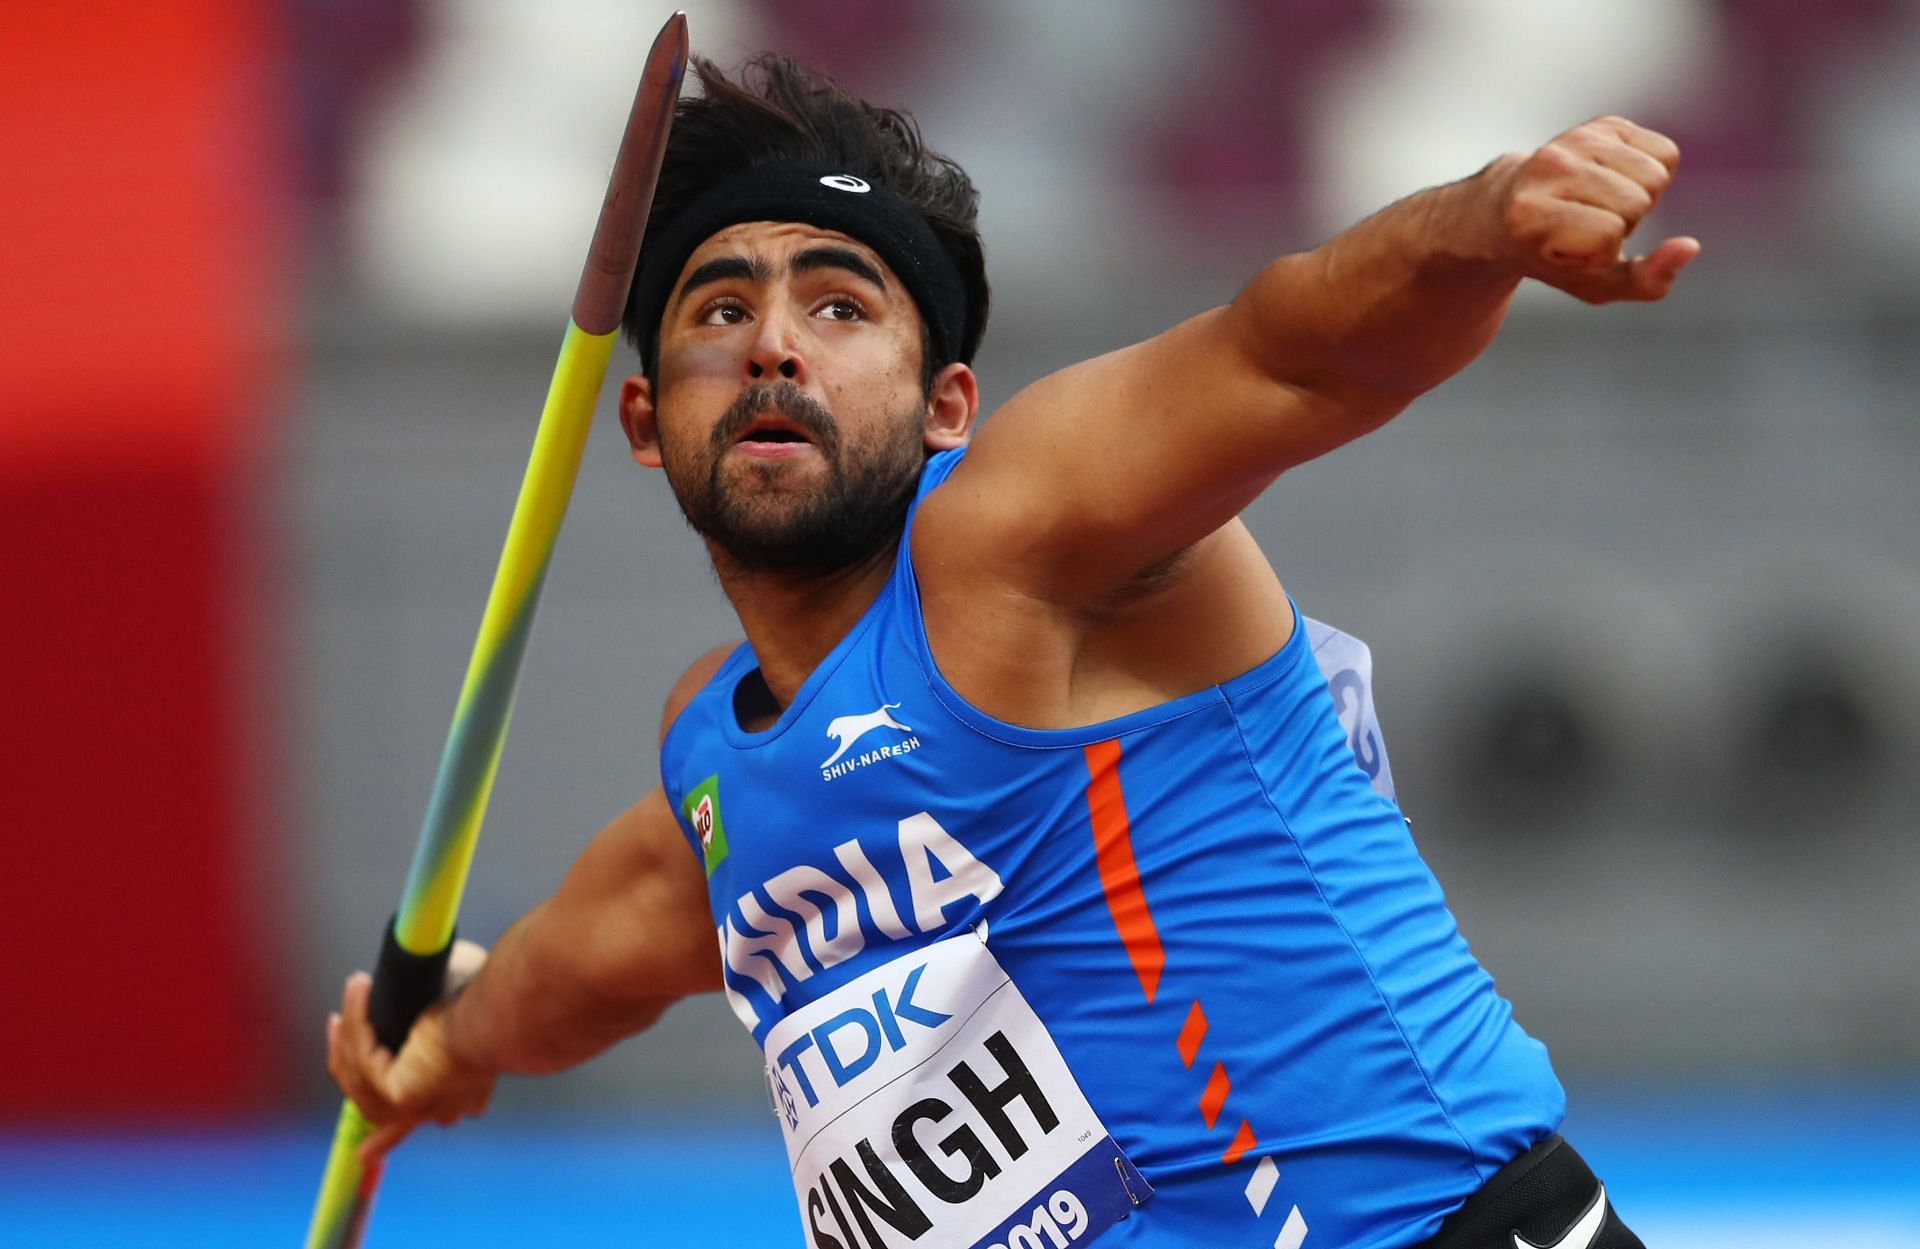 Shivpal Singh at the 17th IAAF World Athletics Championships Doha 2019